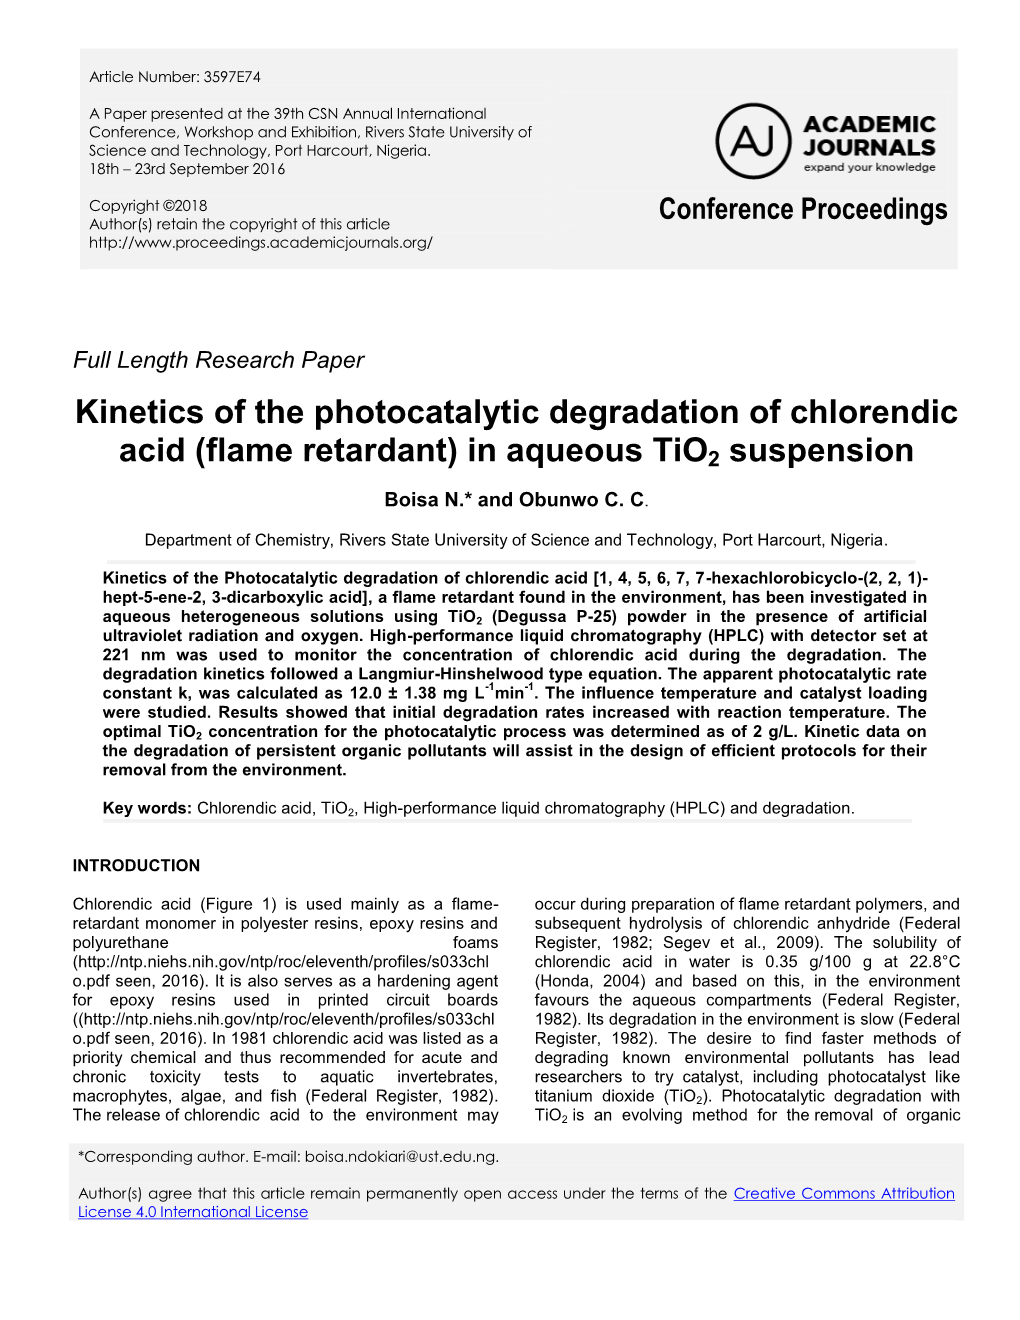 Kinetics of the Photocatalytic Degradation of Chlorendic Acid (Flame Retardant) in Aqueous Tio2 Suspension